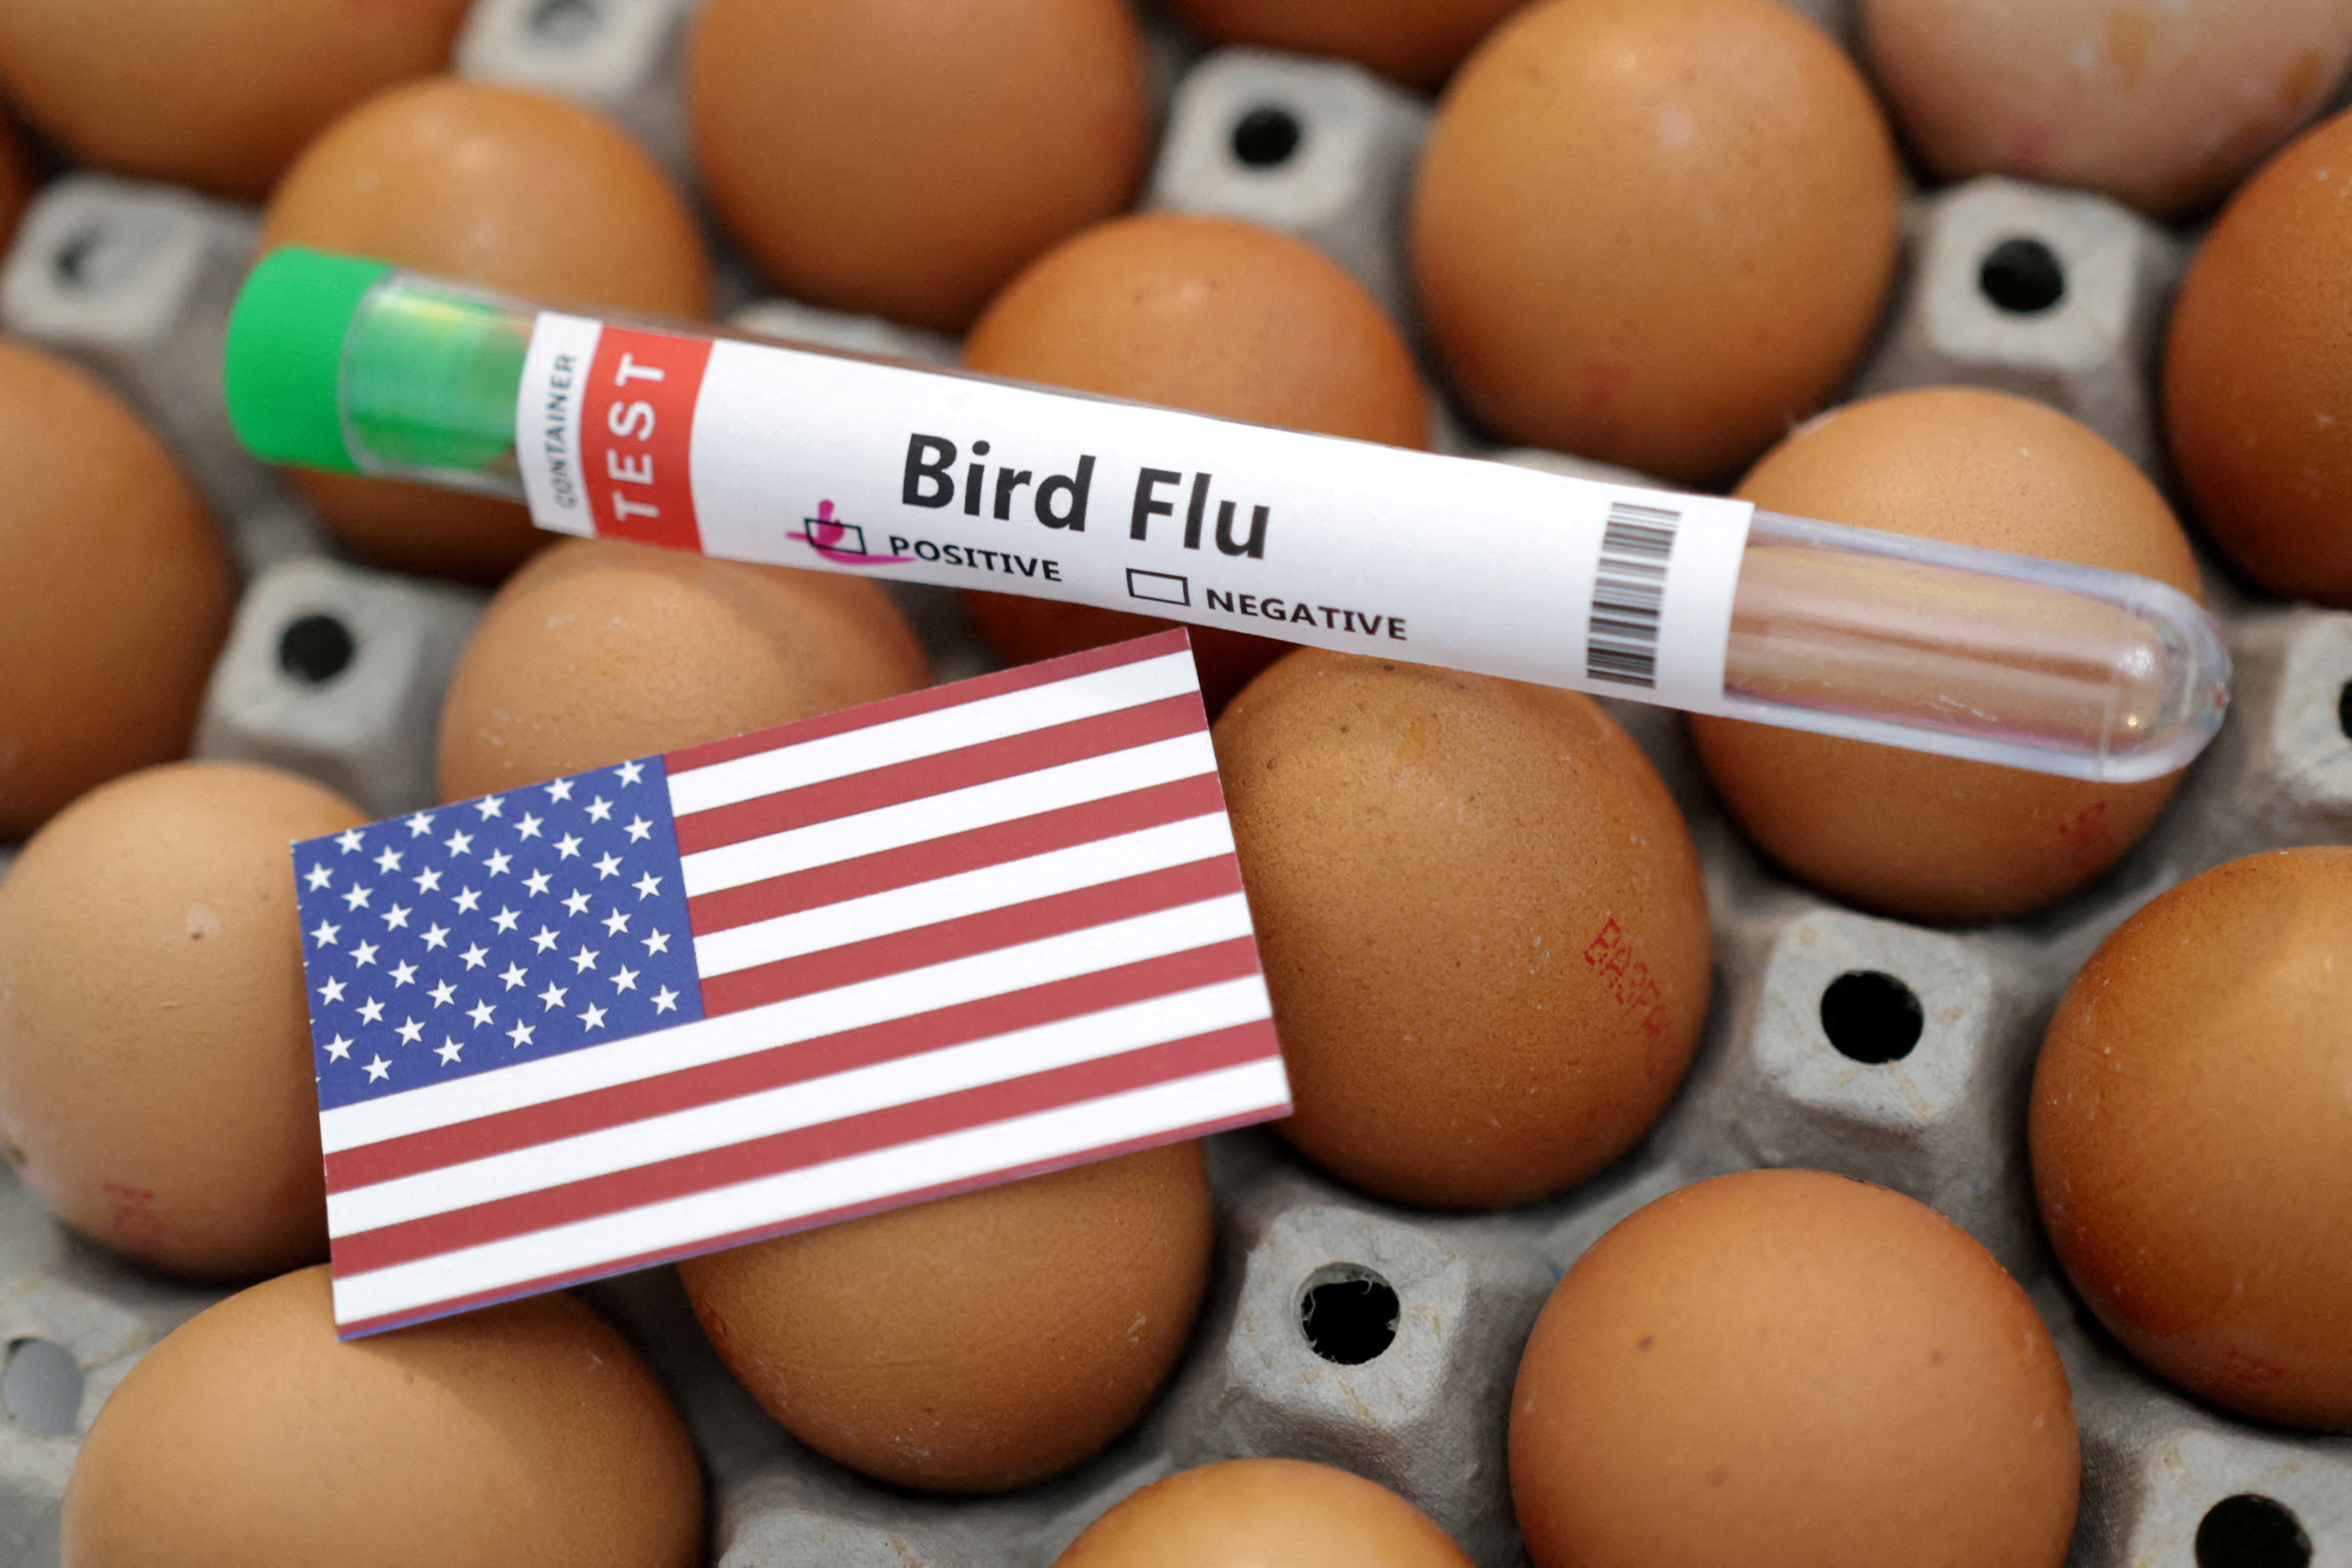 Illustration shows test tube labelled "Bird Flu", eggs and U.S. flag